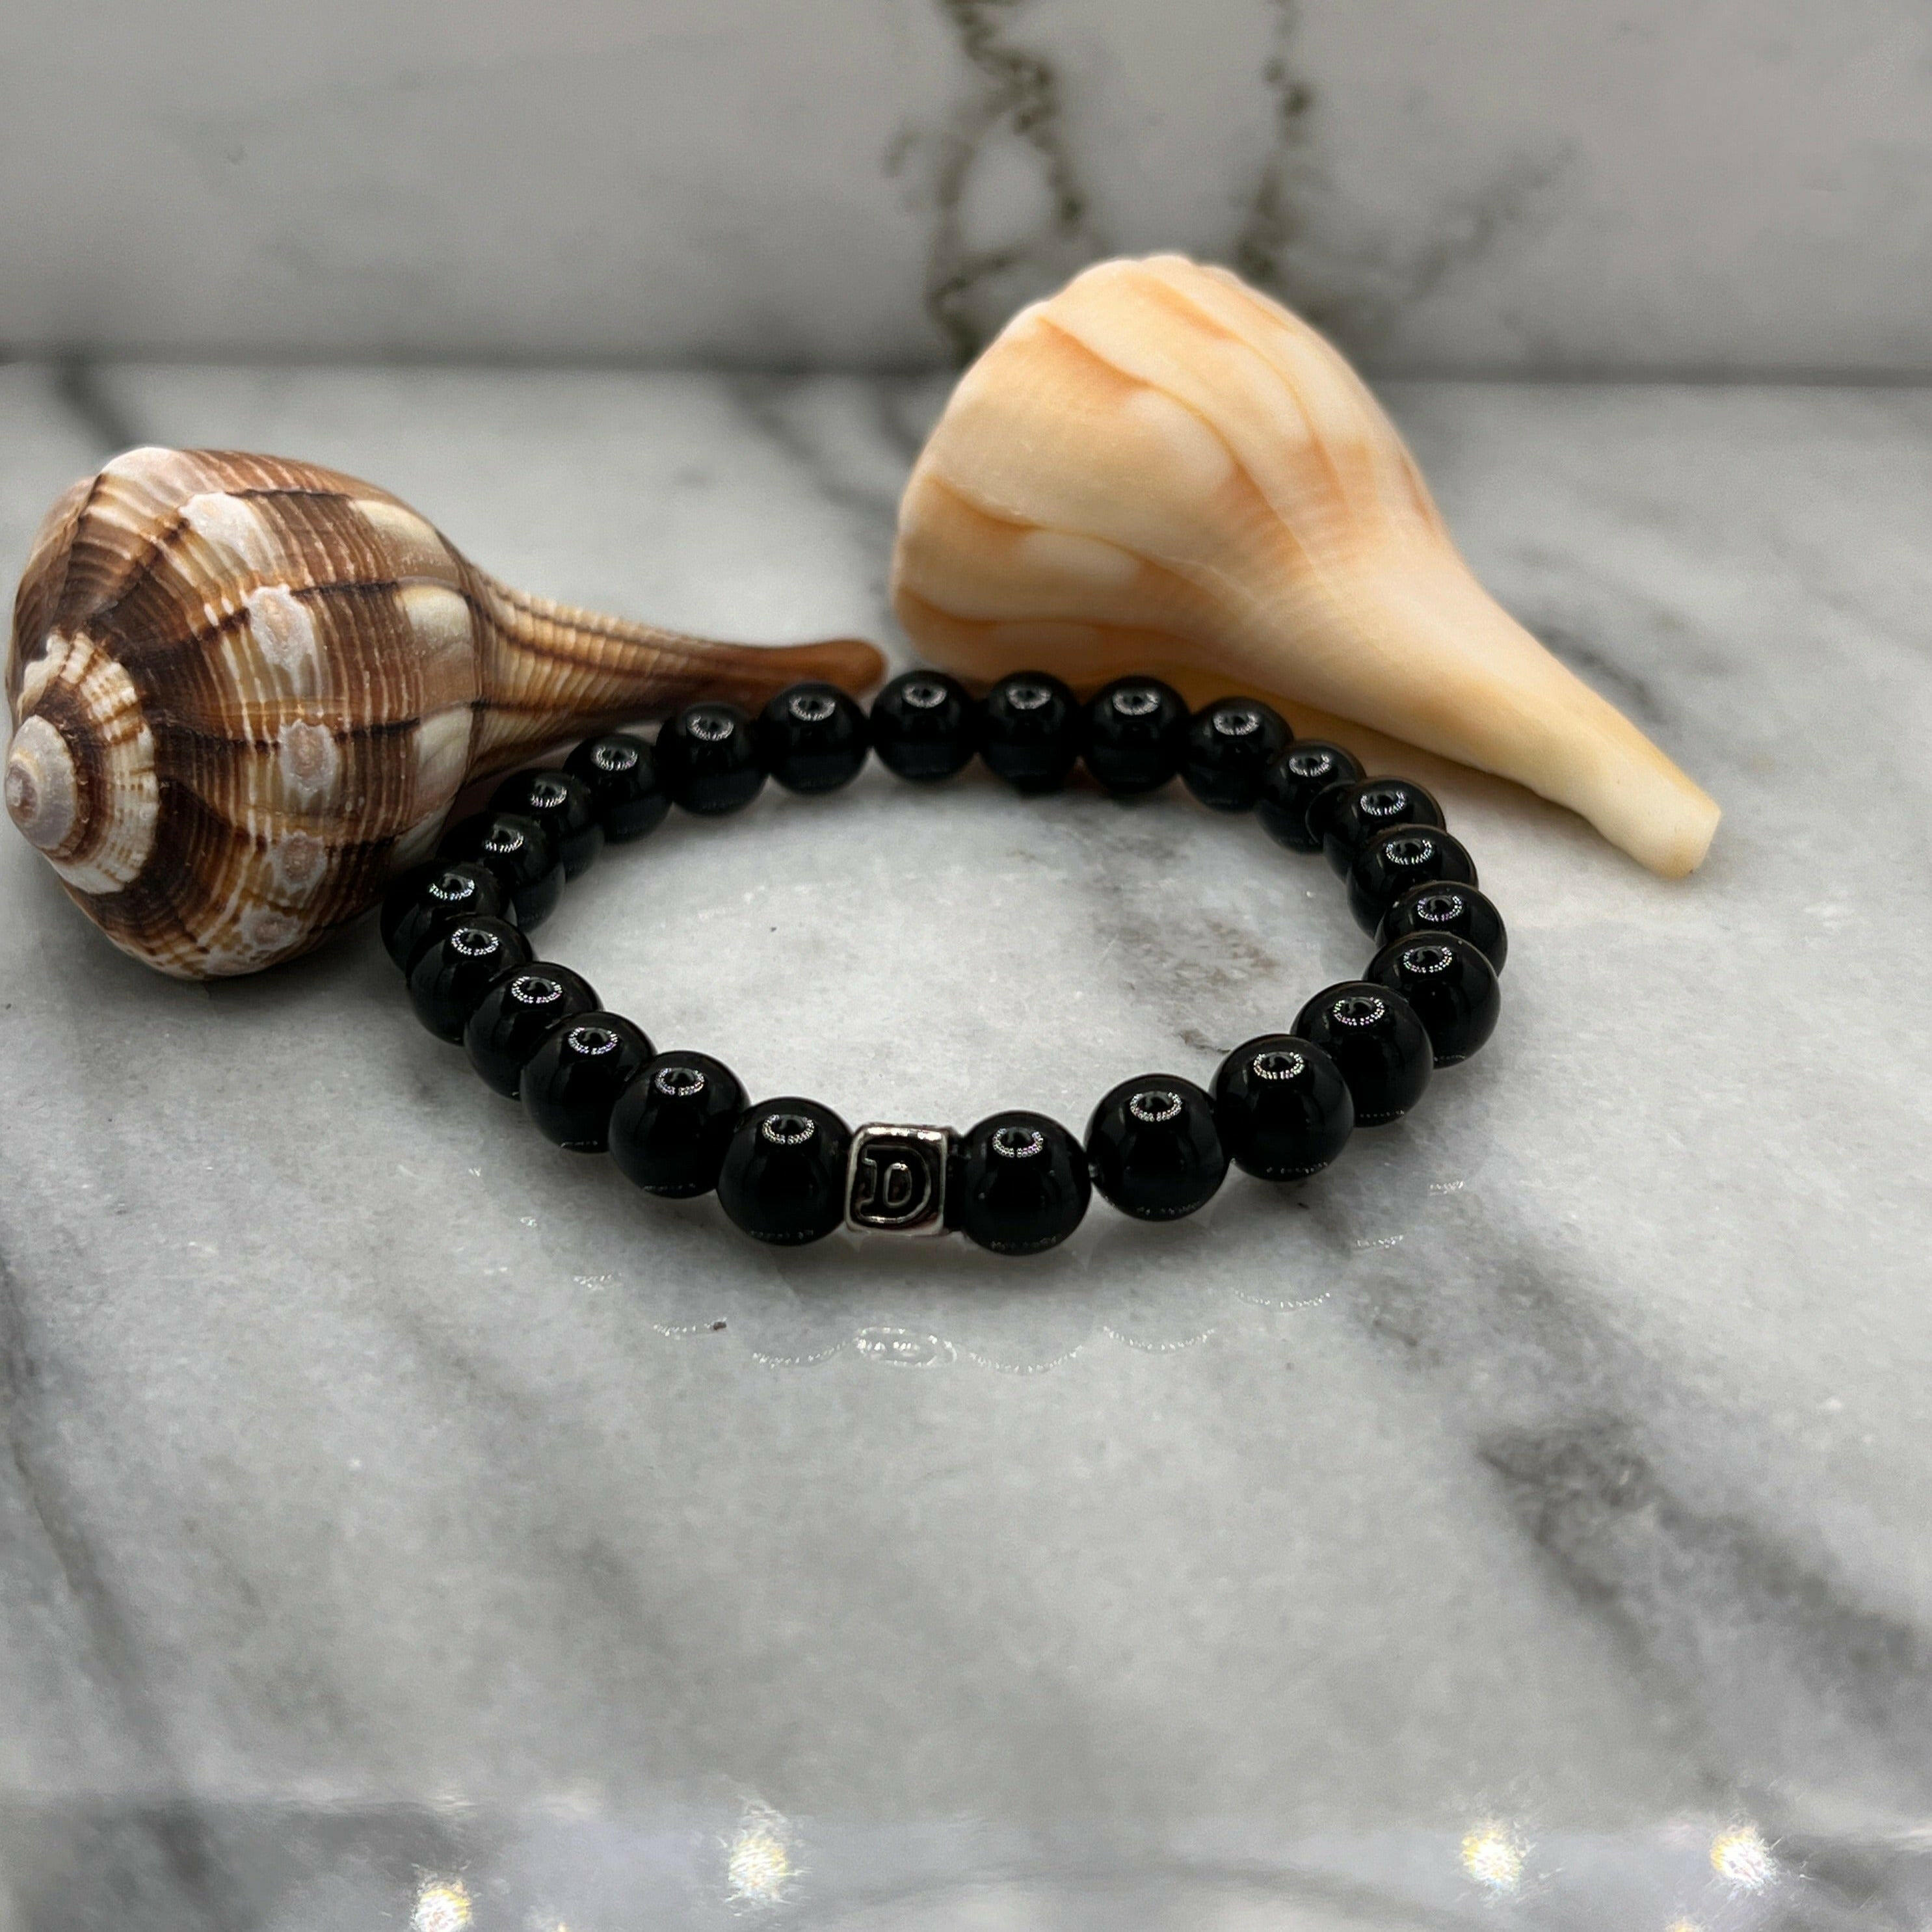 Handcrafted Black Onyx personalized bracelet for elegant style